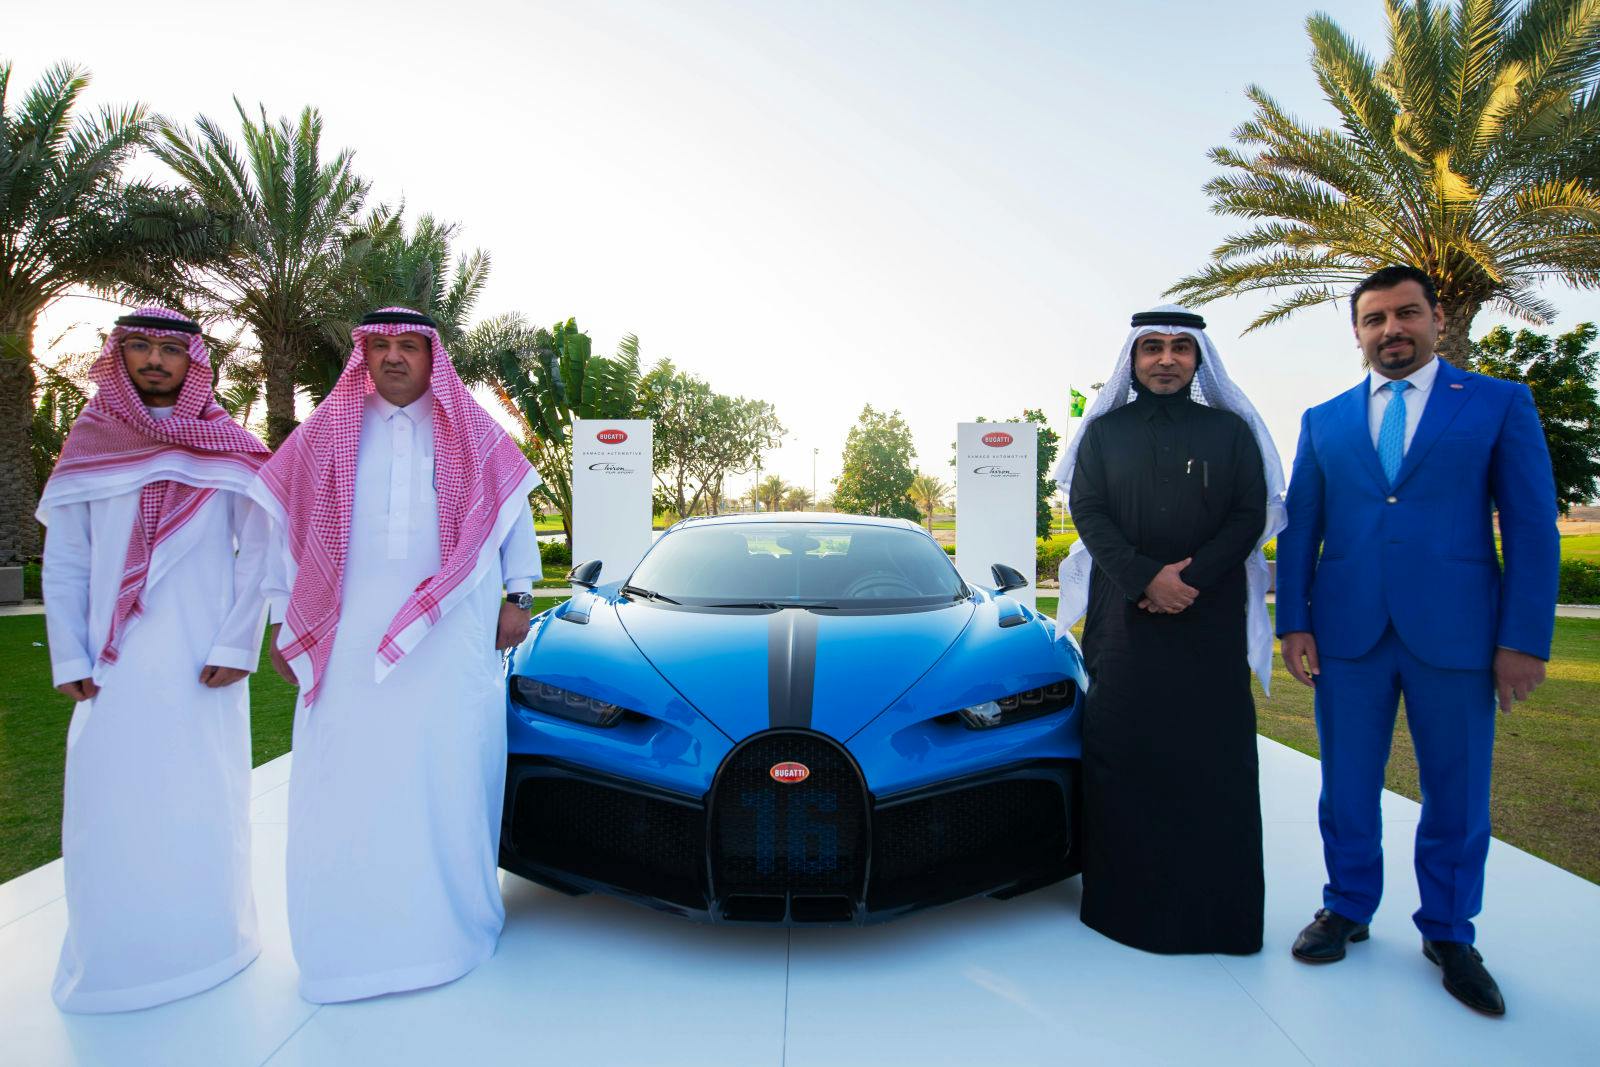 SAMACO Automotive wird neuer Bugatti Dealer Partner. Im Bild : Mr. Yasser Sharbatly - SAMACO Automotive Board Member, Mr. Mohammed Raffa - SAMACO Automotive CEO, Mr. Nizar Al Karim - Bugatti KSA Brand Manager, Mr. Abdulaziz Sharbatly (von rechts nach links)